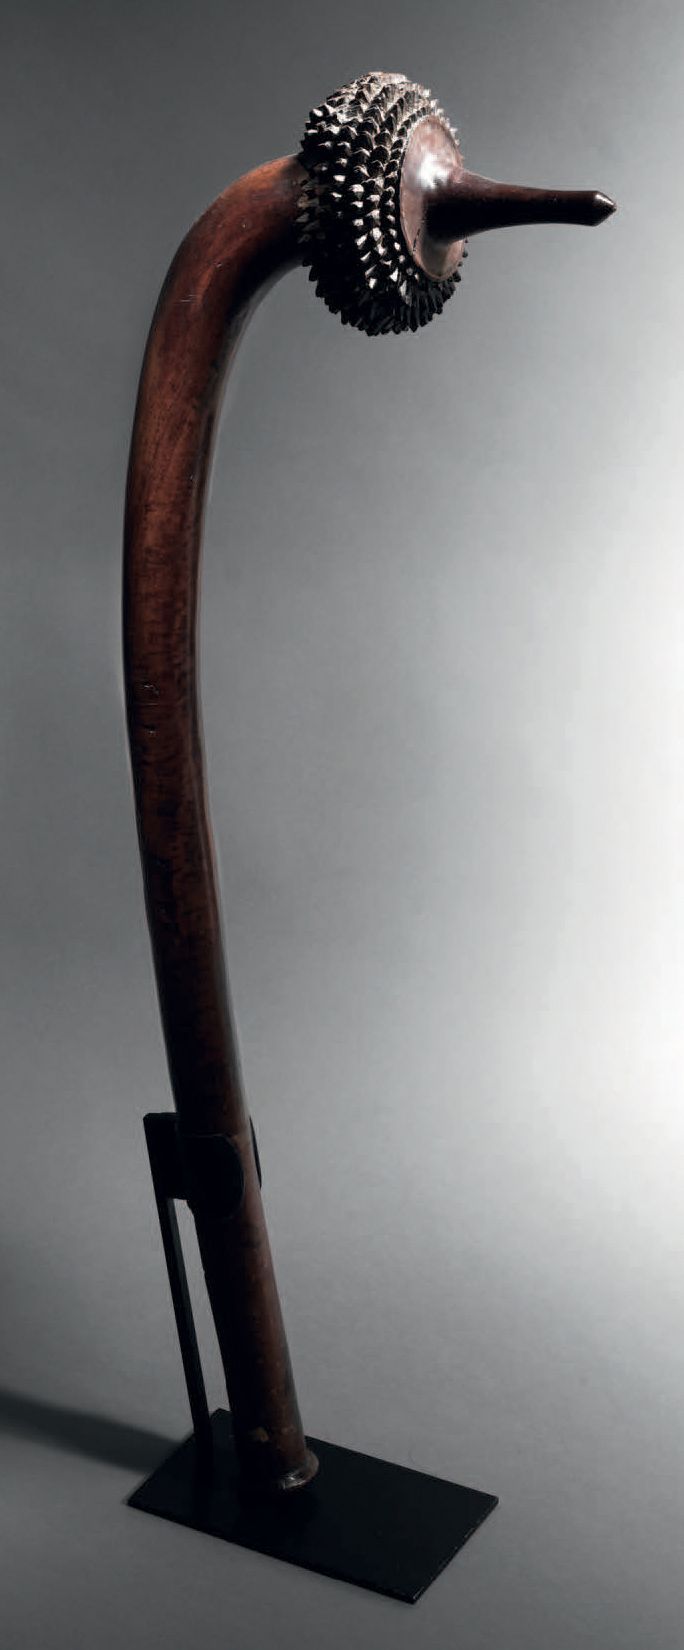 Null 图托克亚球杆，斐济群岛
木头
高85厘米
图托克亚球杆，斐济岛
高33/8英寸
在长长的弯曲手柄的顶端，喷出一个圆头，上面有长长的尖刺装饰。
在斐济广&hellip;